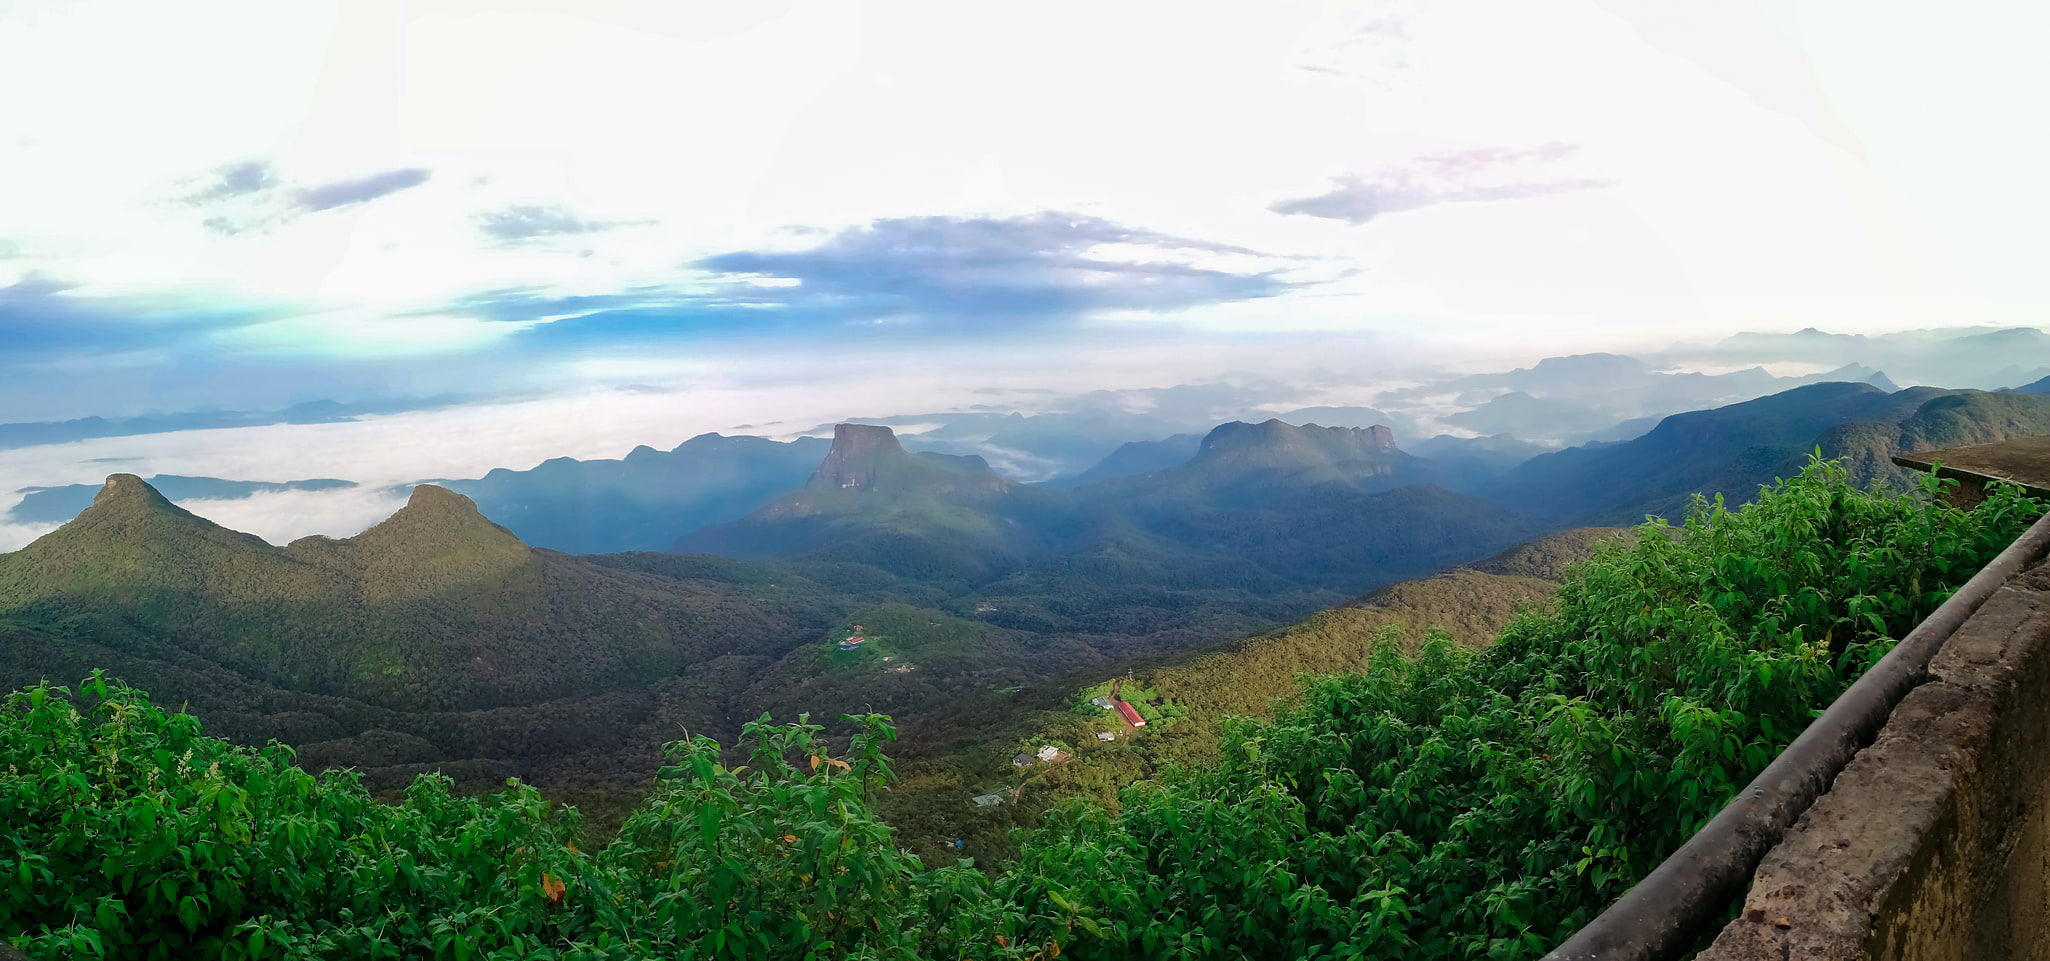 Peak Wilderness Sanctuary, Sri Lanka